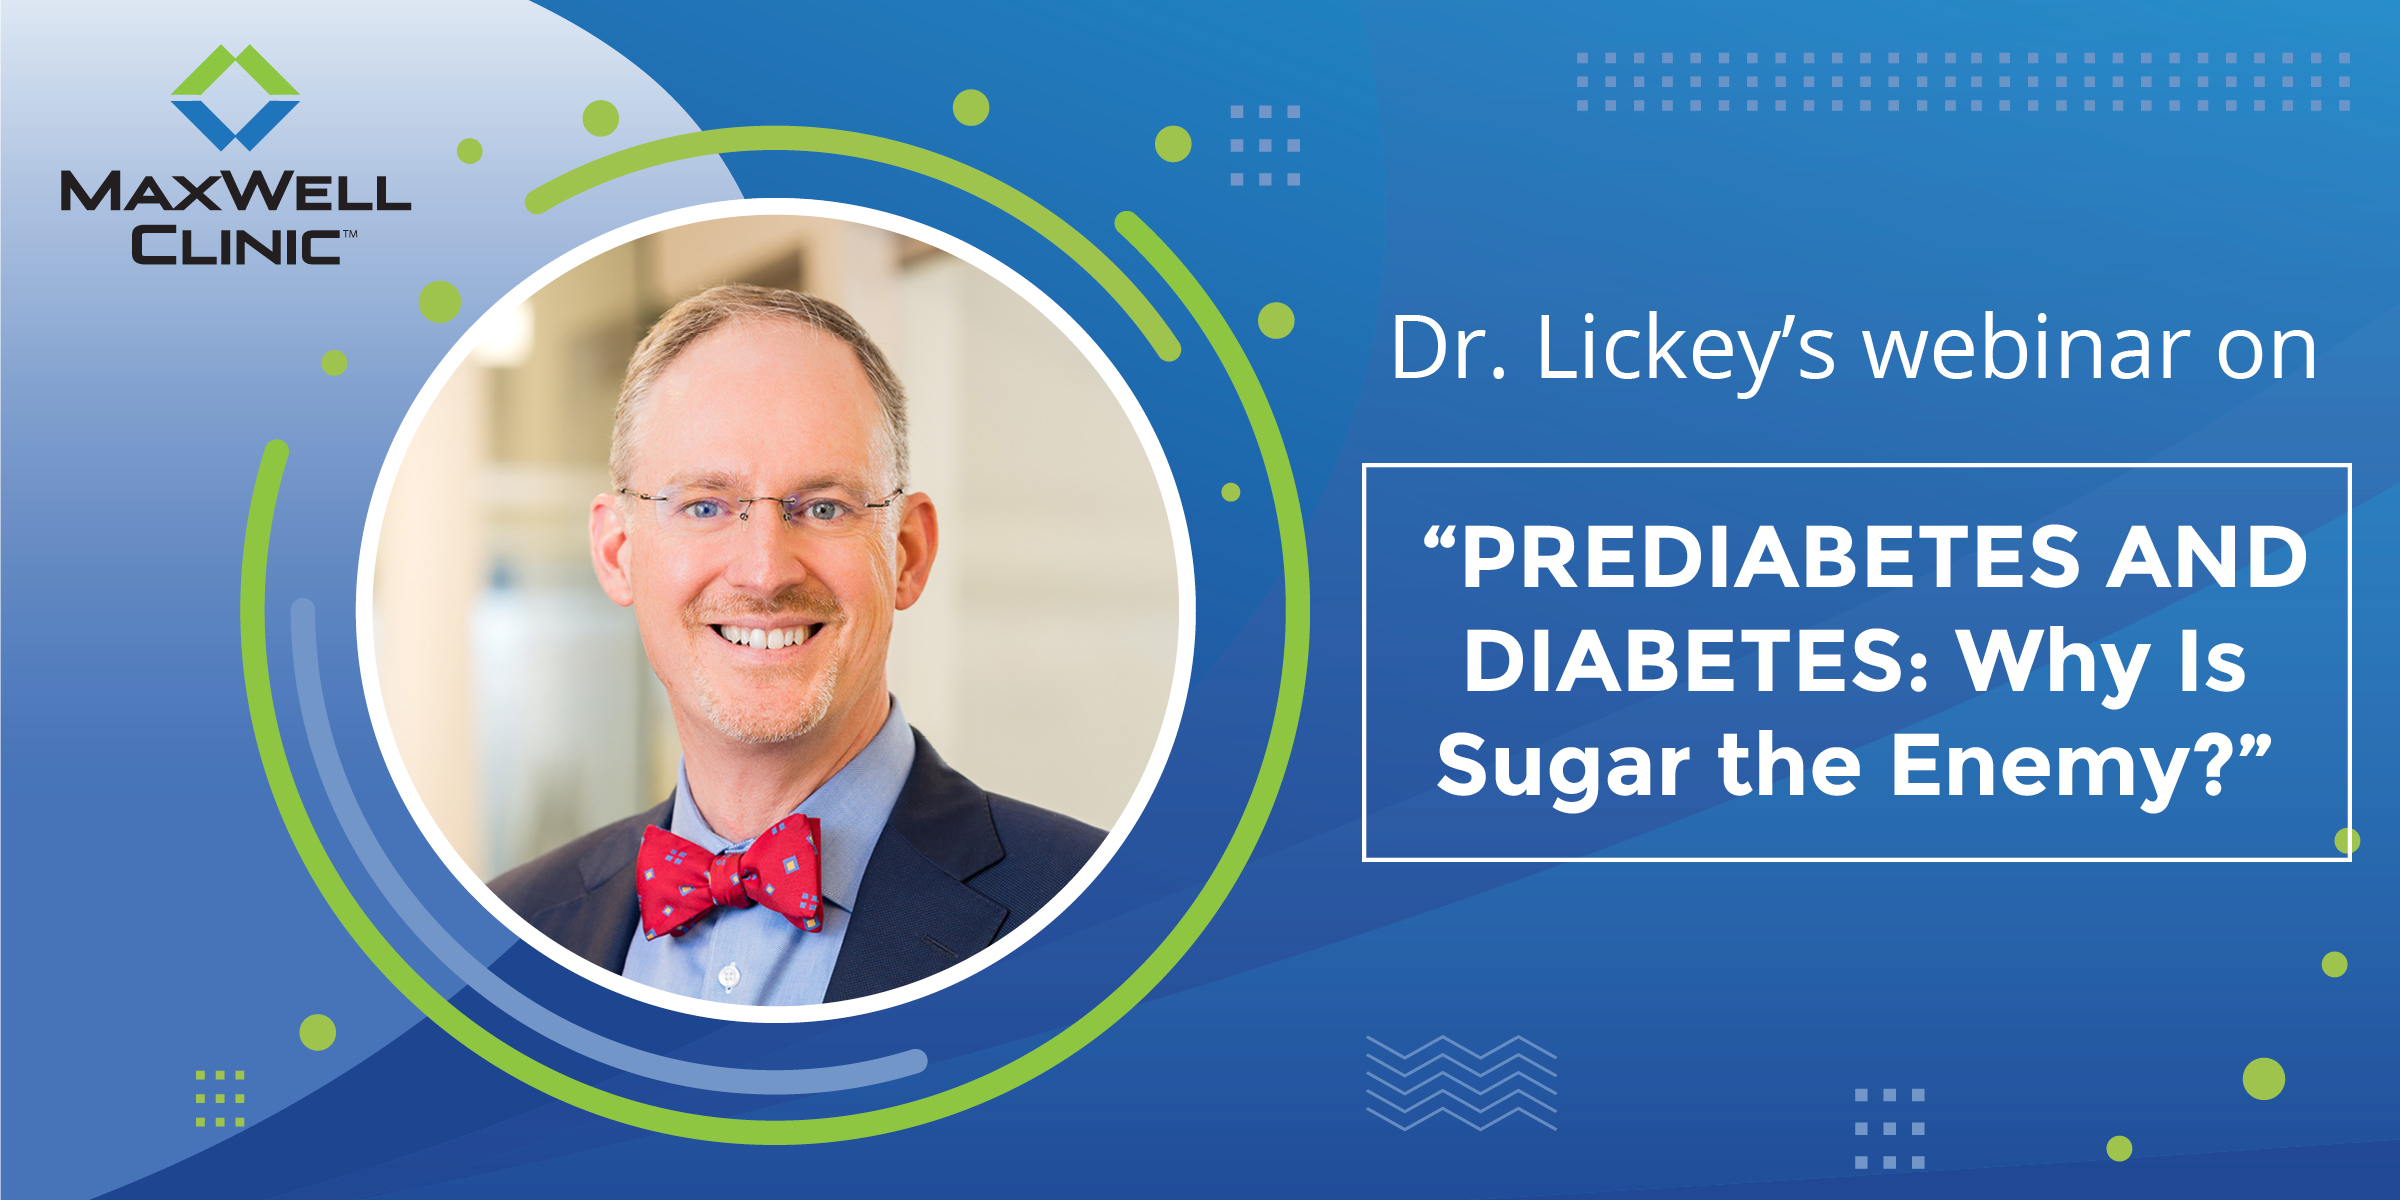 Dr Lickey's webinar on Prediabetes and Diabetes